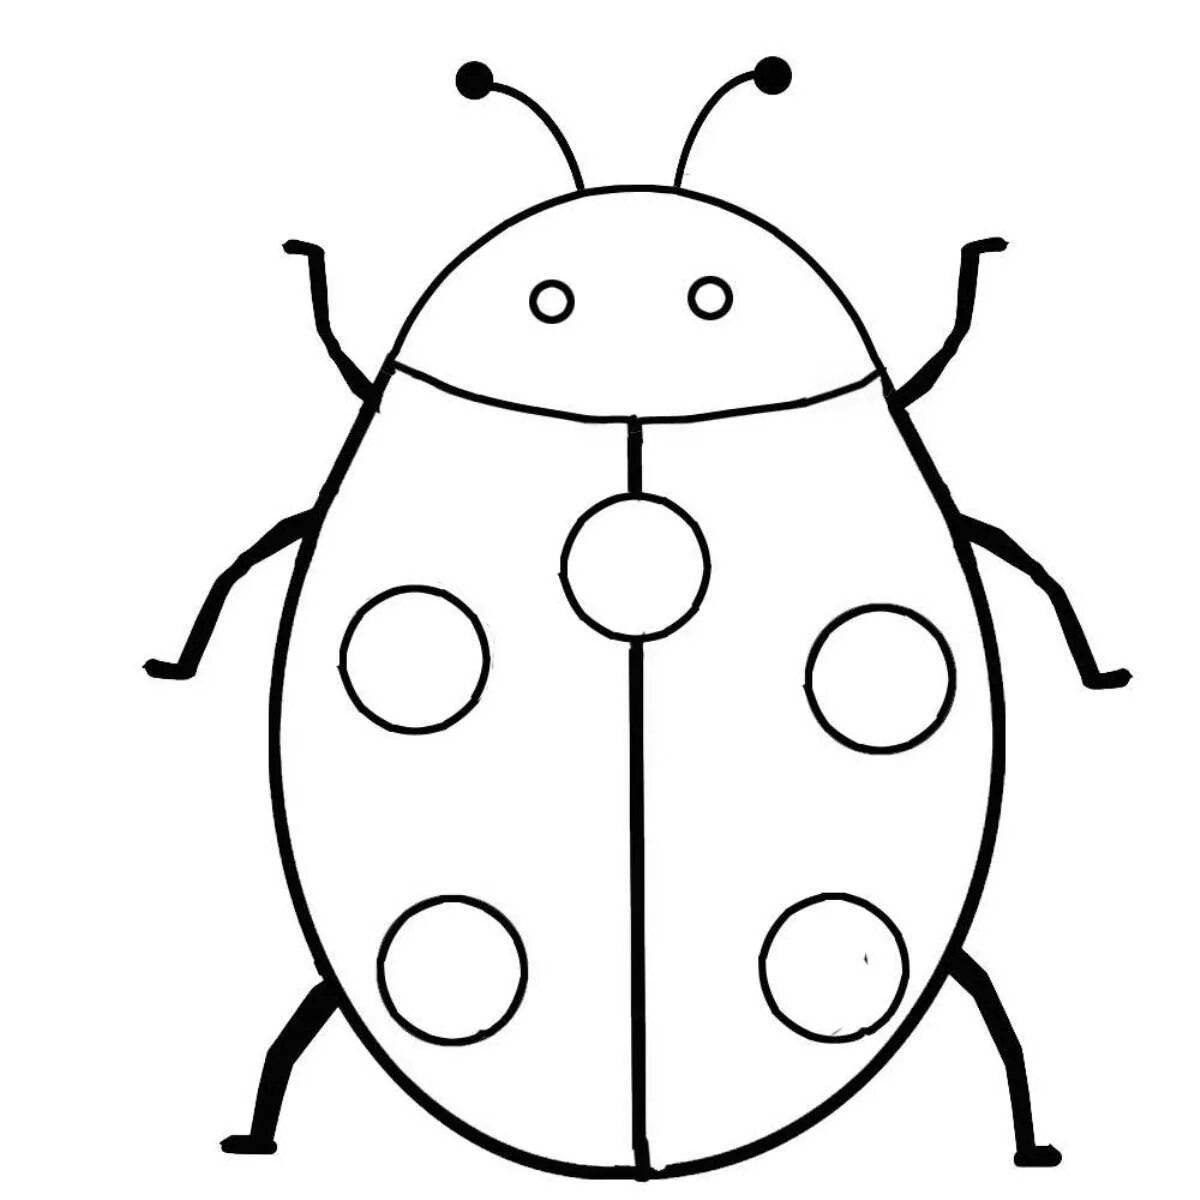 Live ladybug coloring for kids